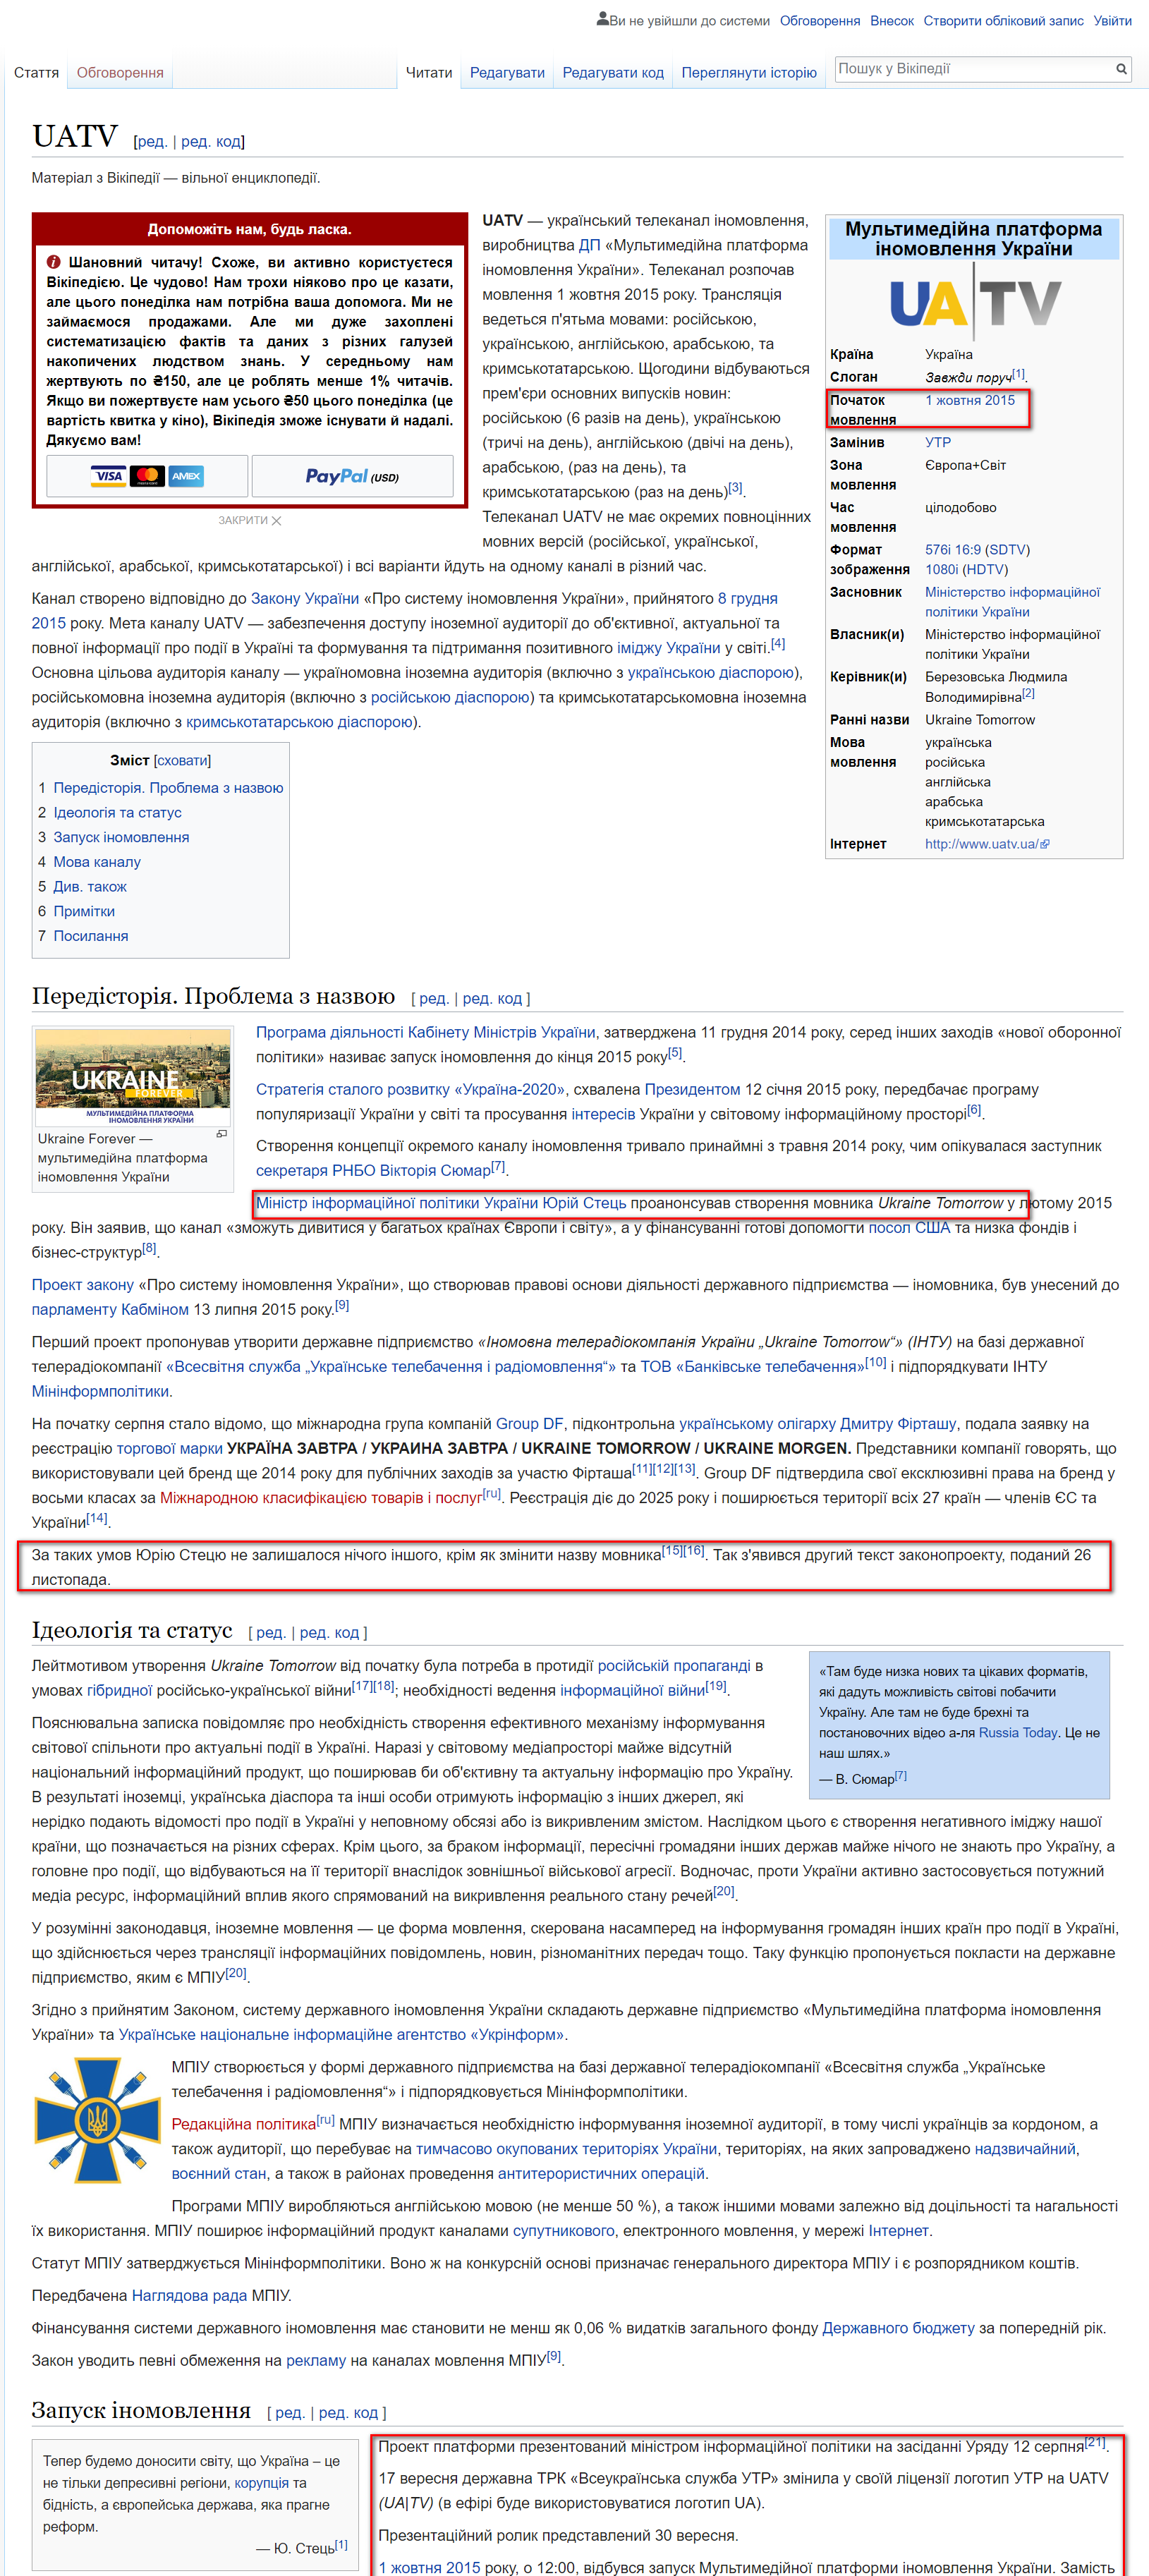 https://uk.wikipedia.org/wiki/UATV